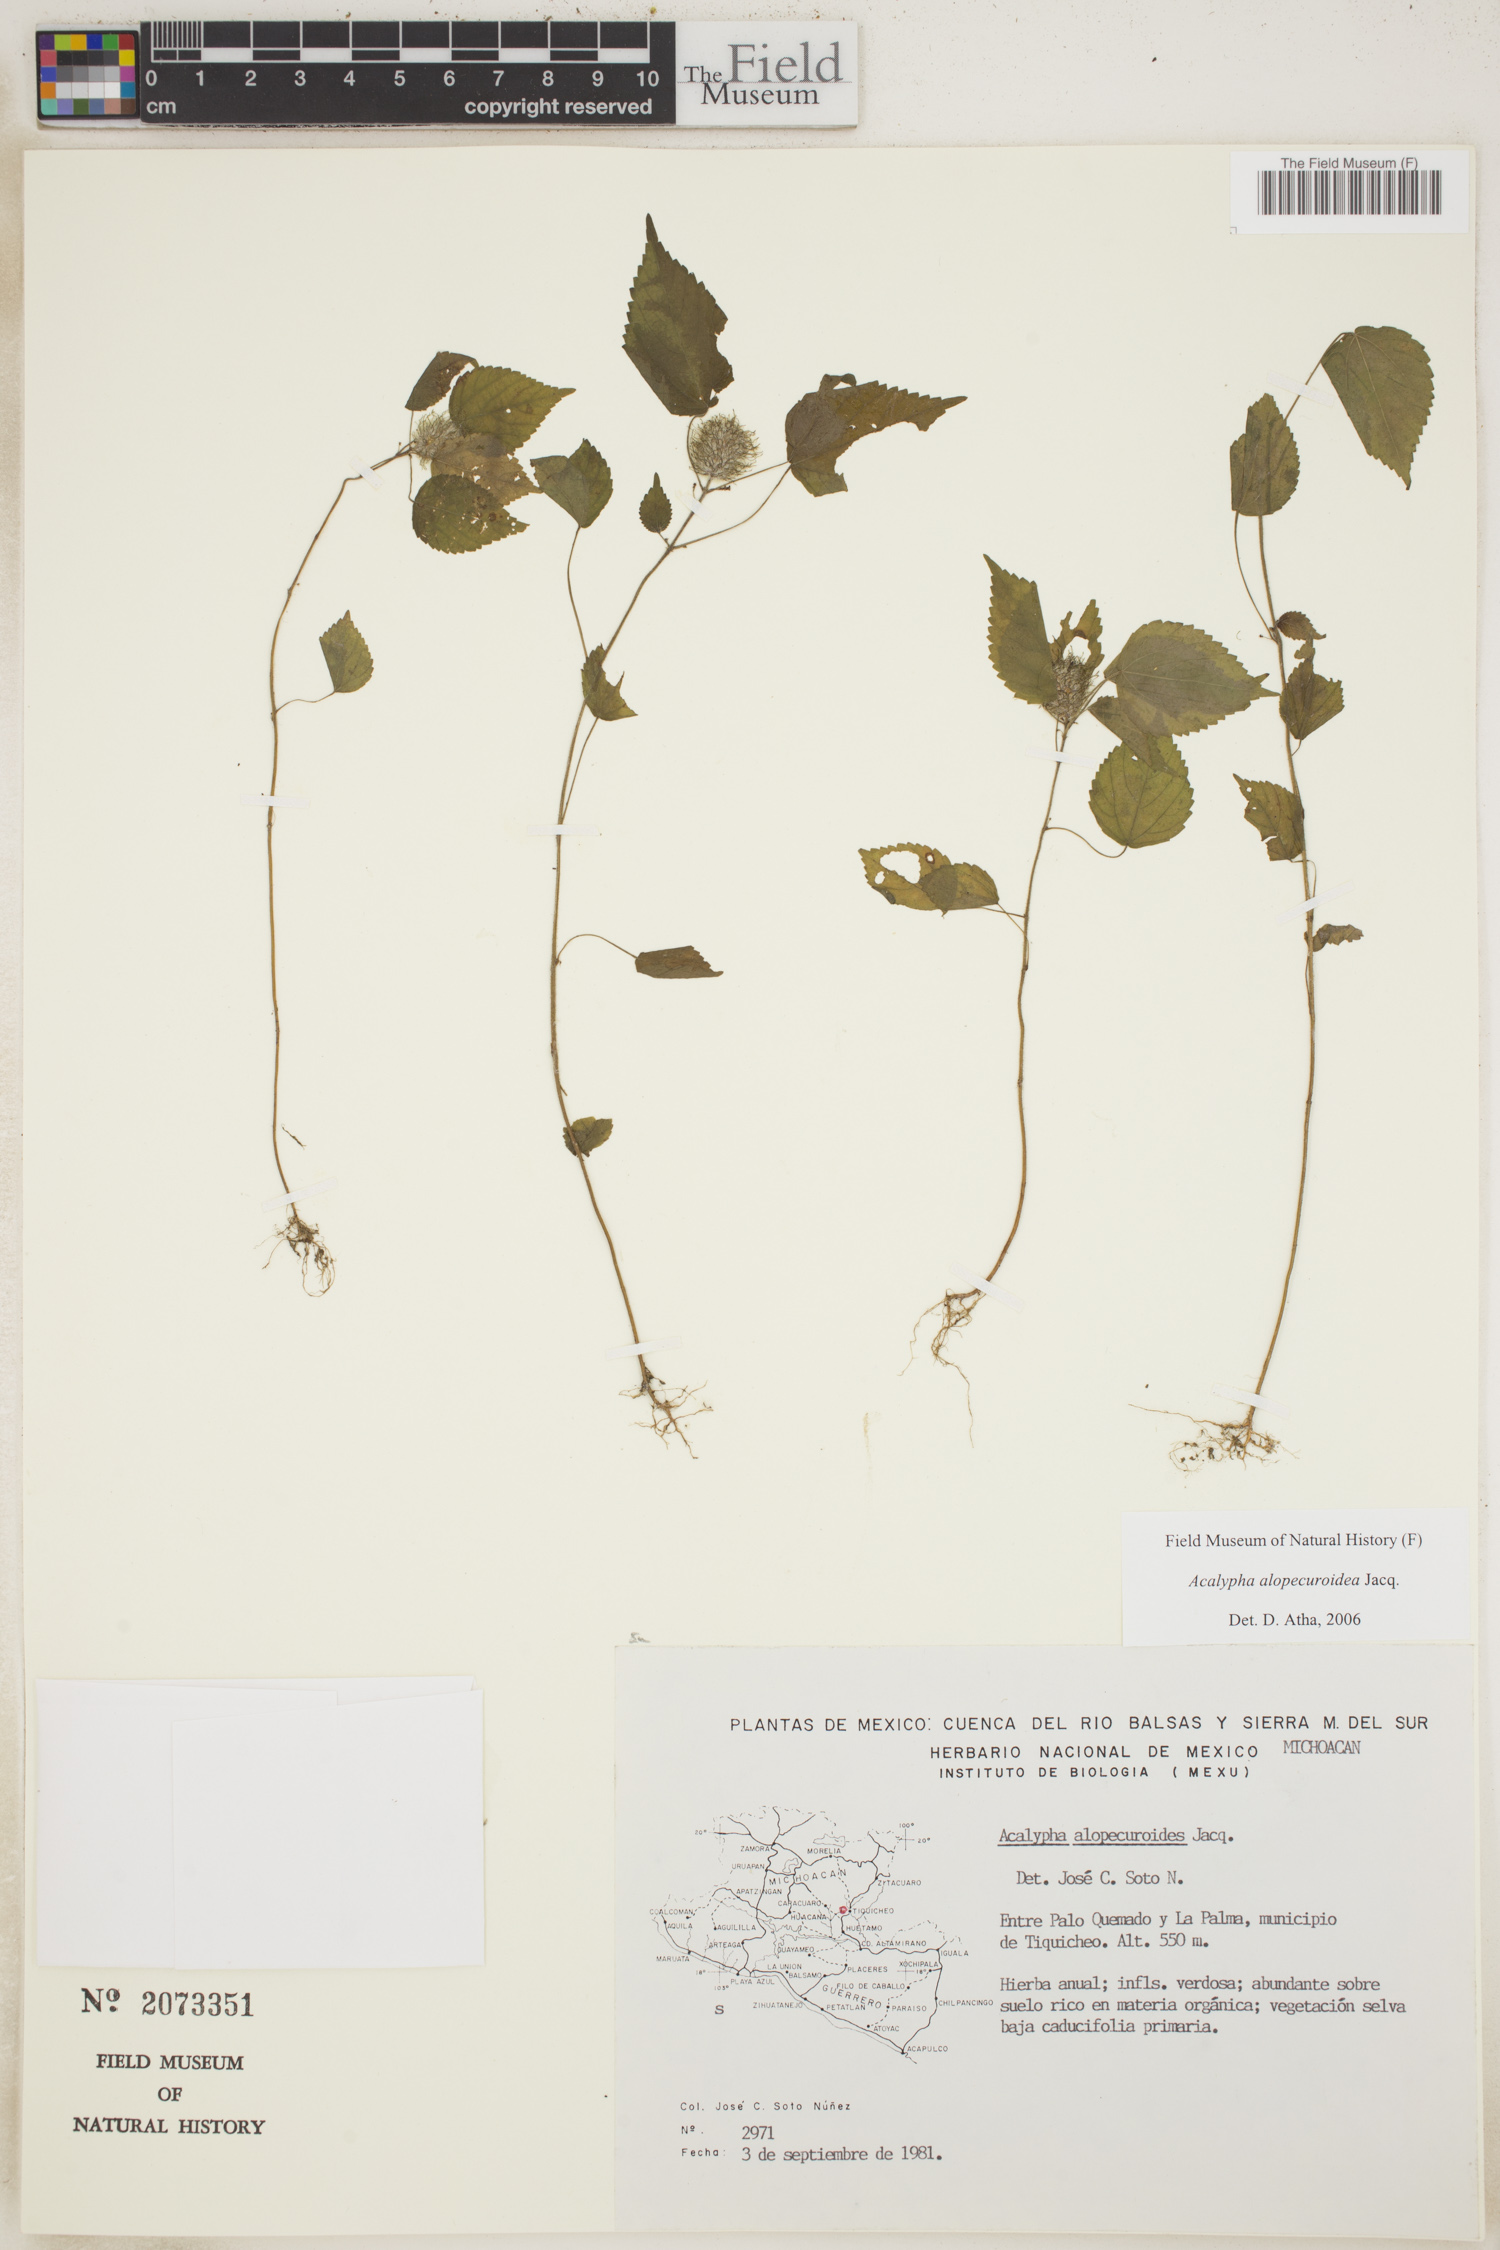 Acalypha alopecuroidea image